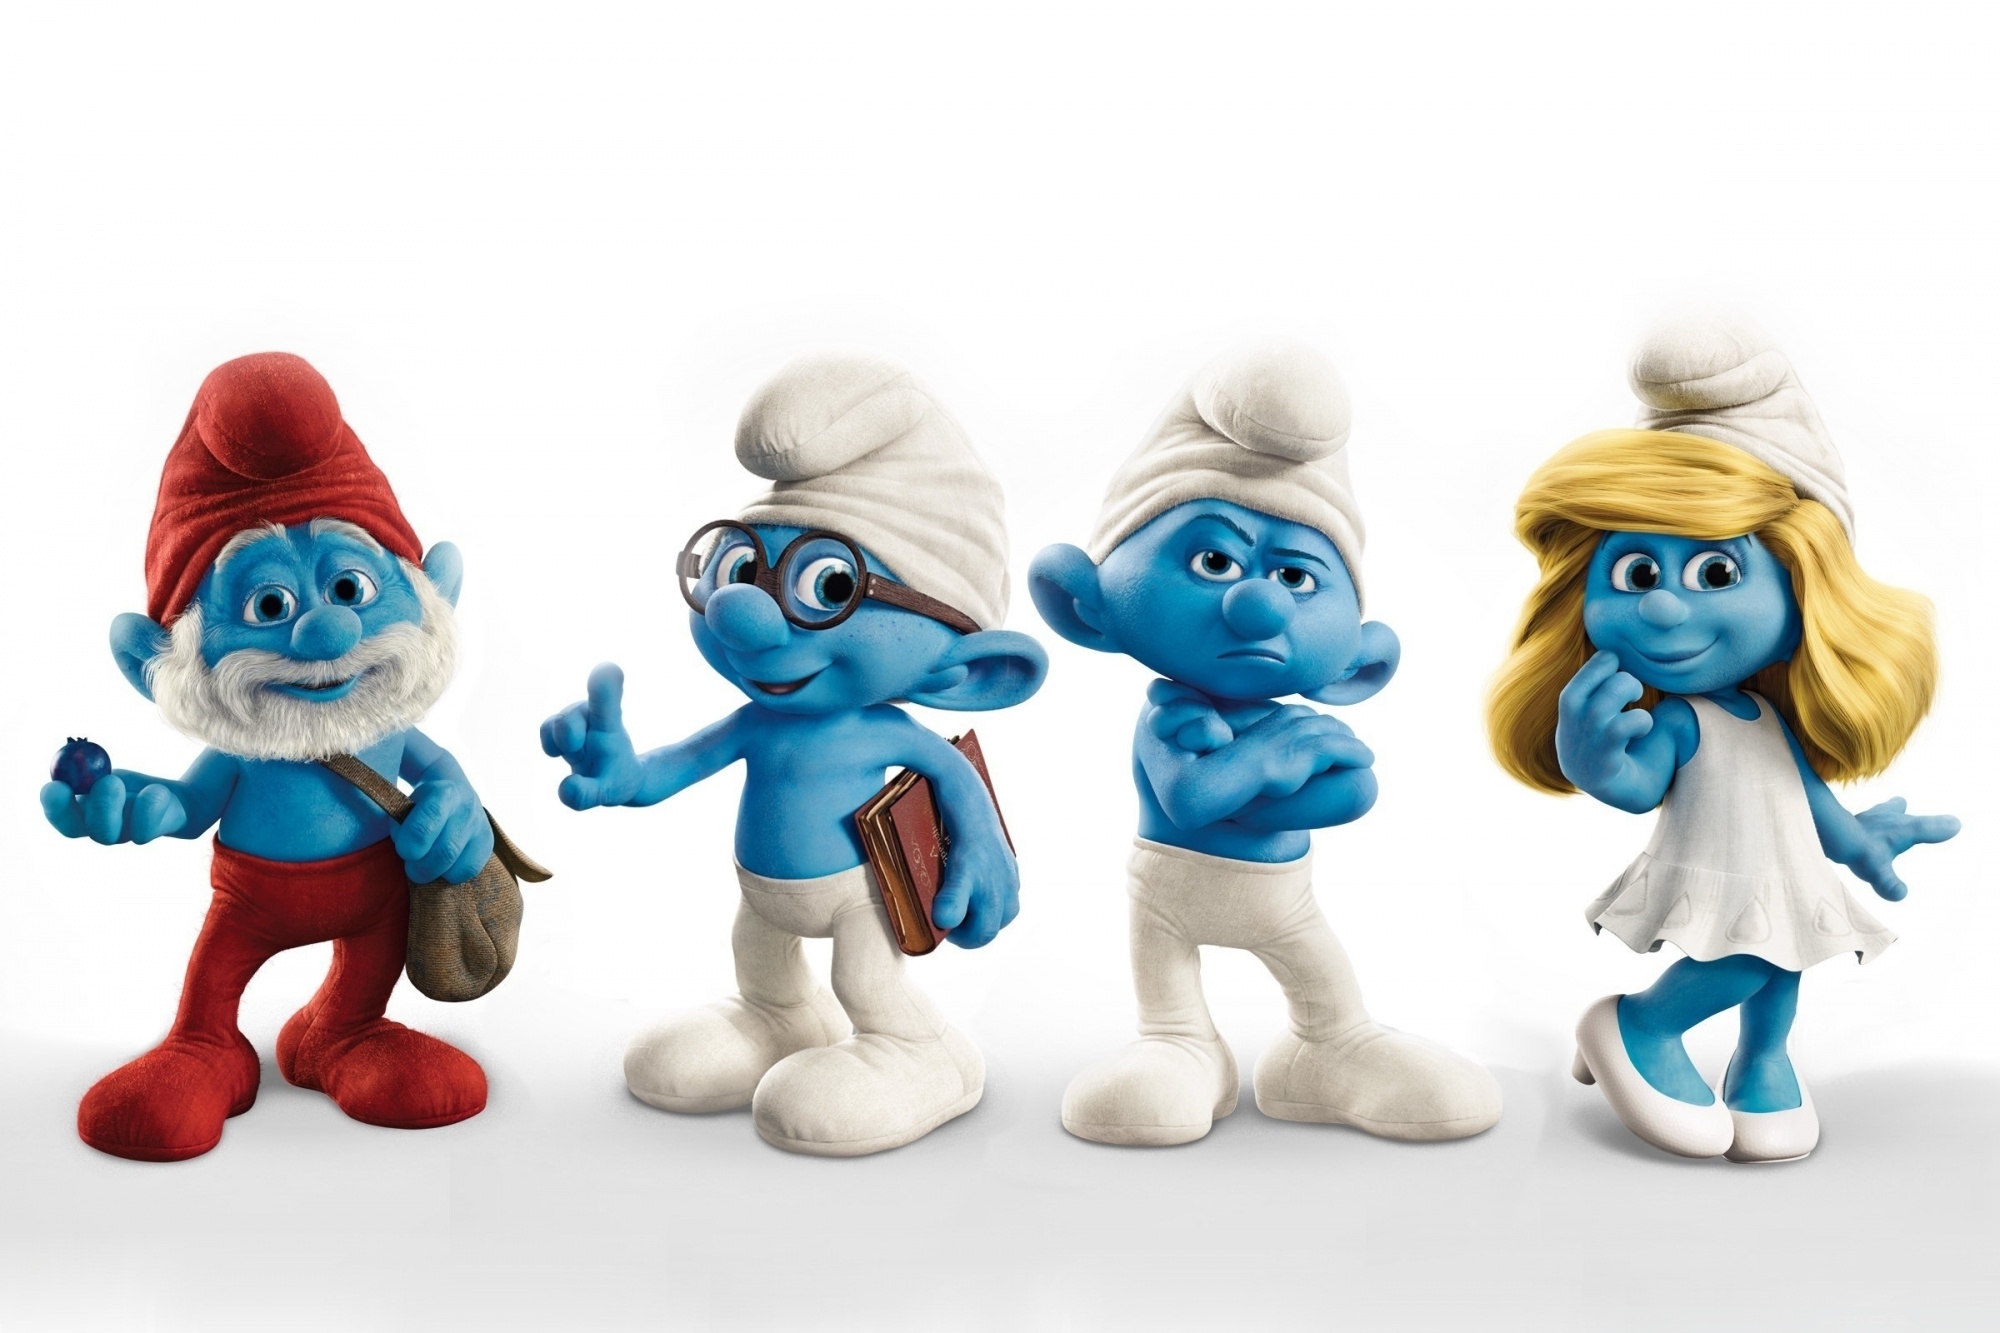 The Smurfs Characters Ultra HD Desktop Background Wallpaper for 4K UHD TV, Tablet